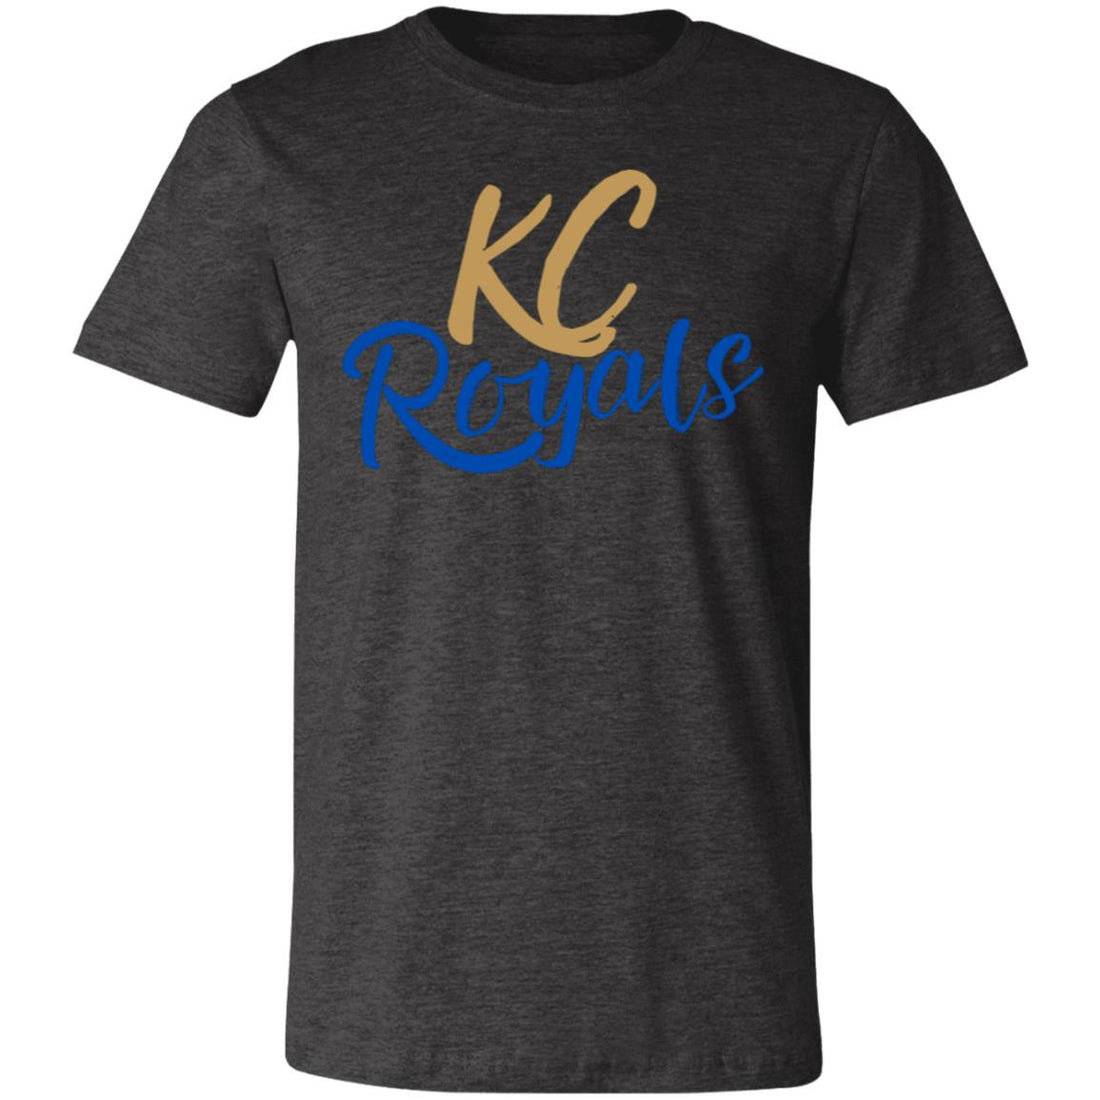 Royals KC Short-Sleeve T-Shirt - T-Shirts - Positively Sassy - Royals KC Short-Sleeve T-Shirt